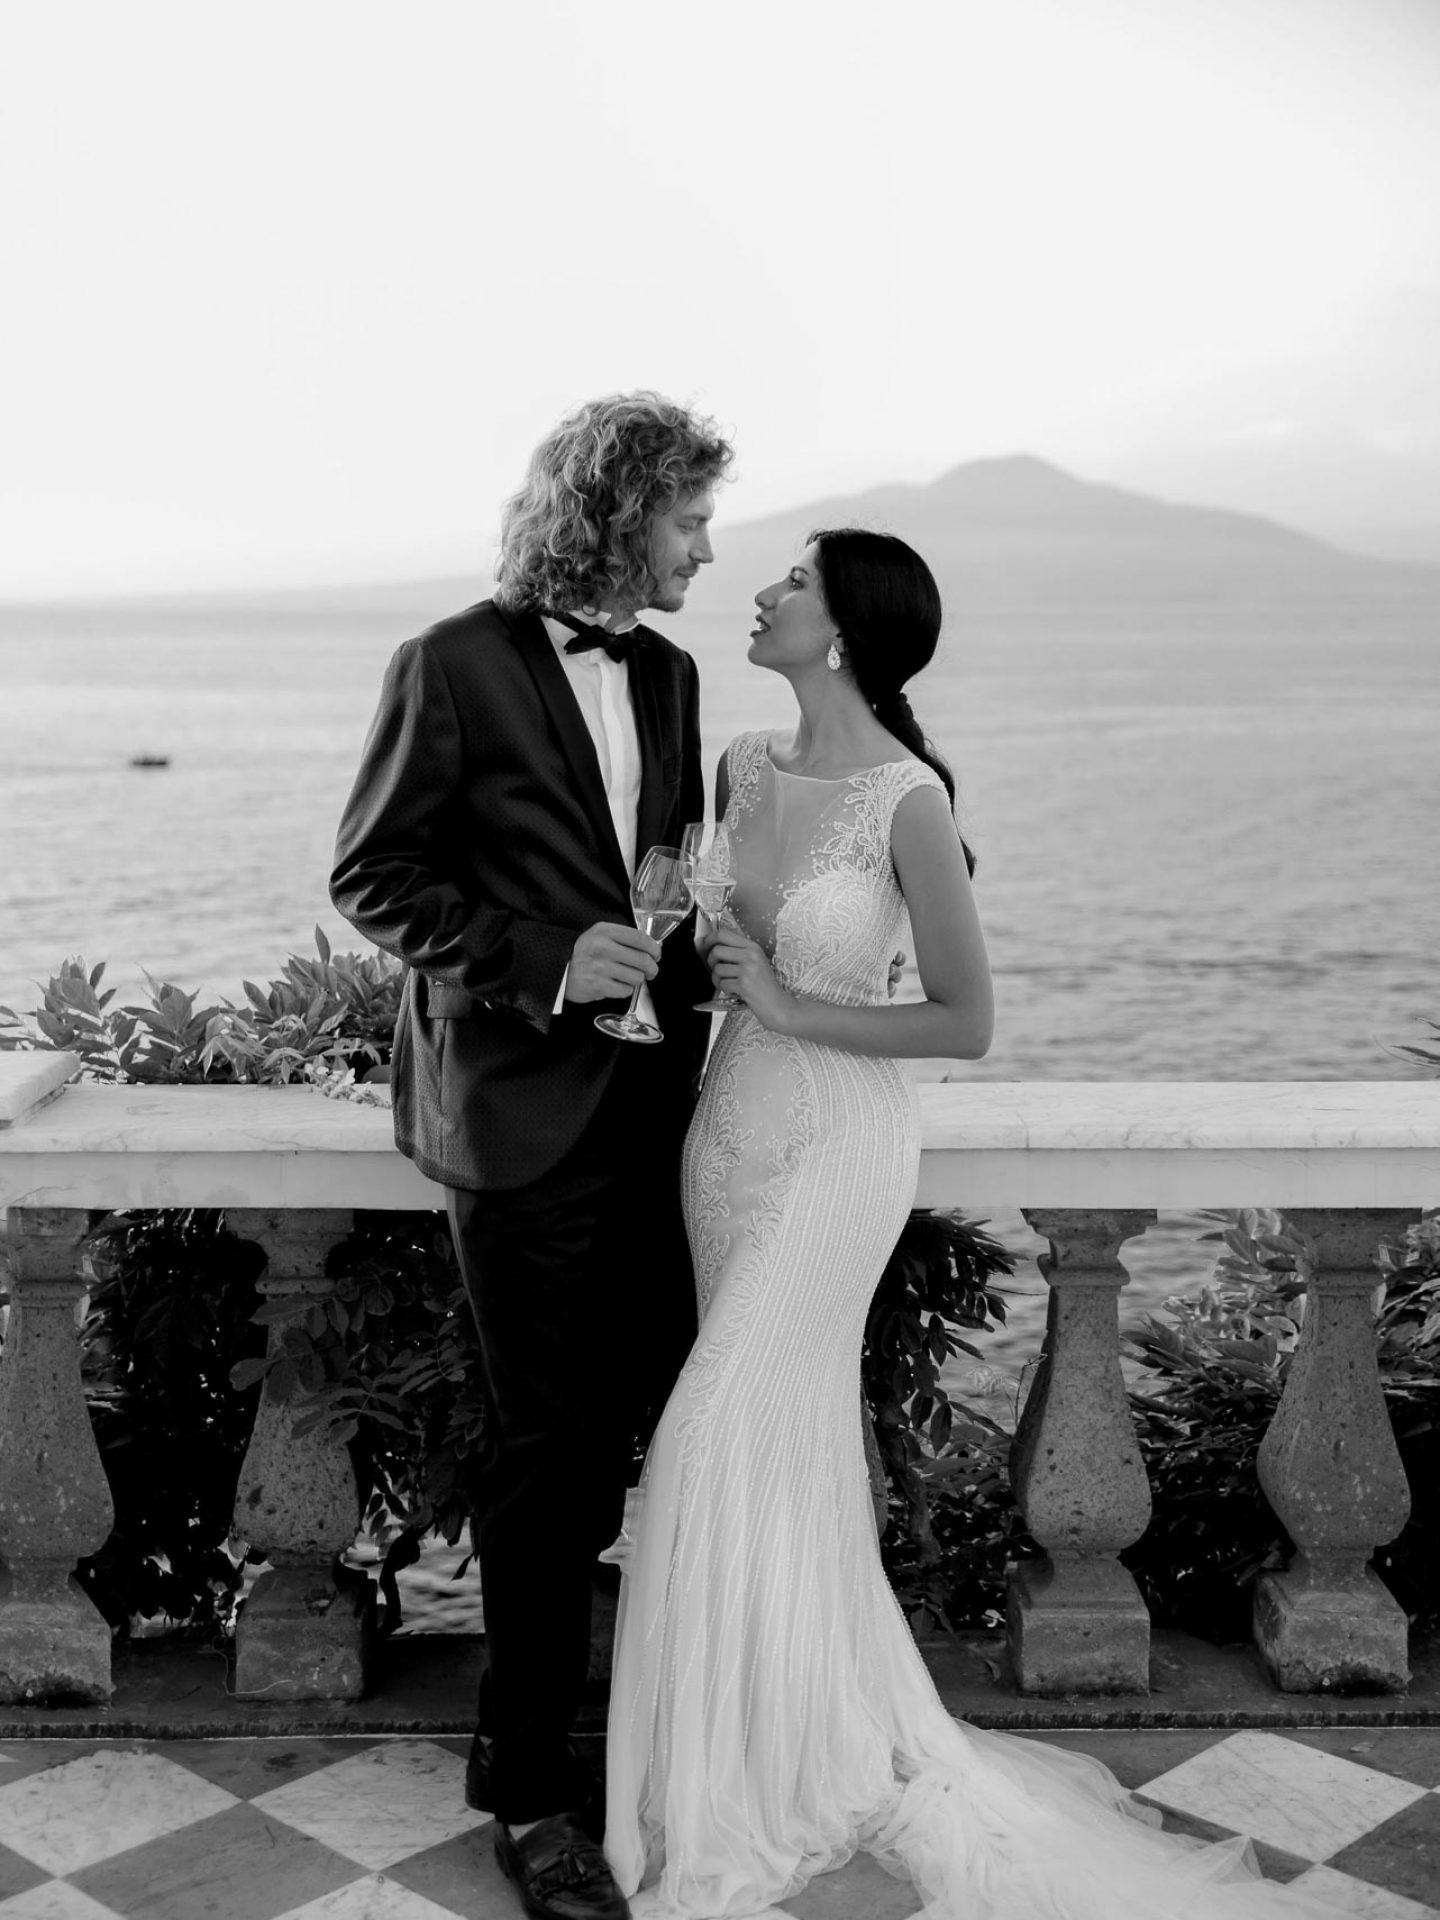 villa astor top destination for weddings elopement intimate weddings couples amalfi coast italy